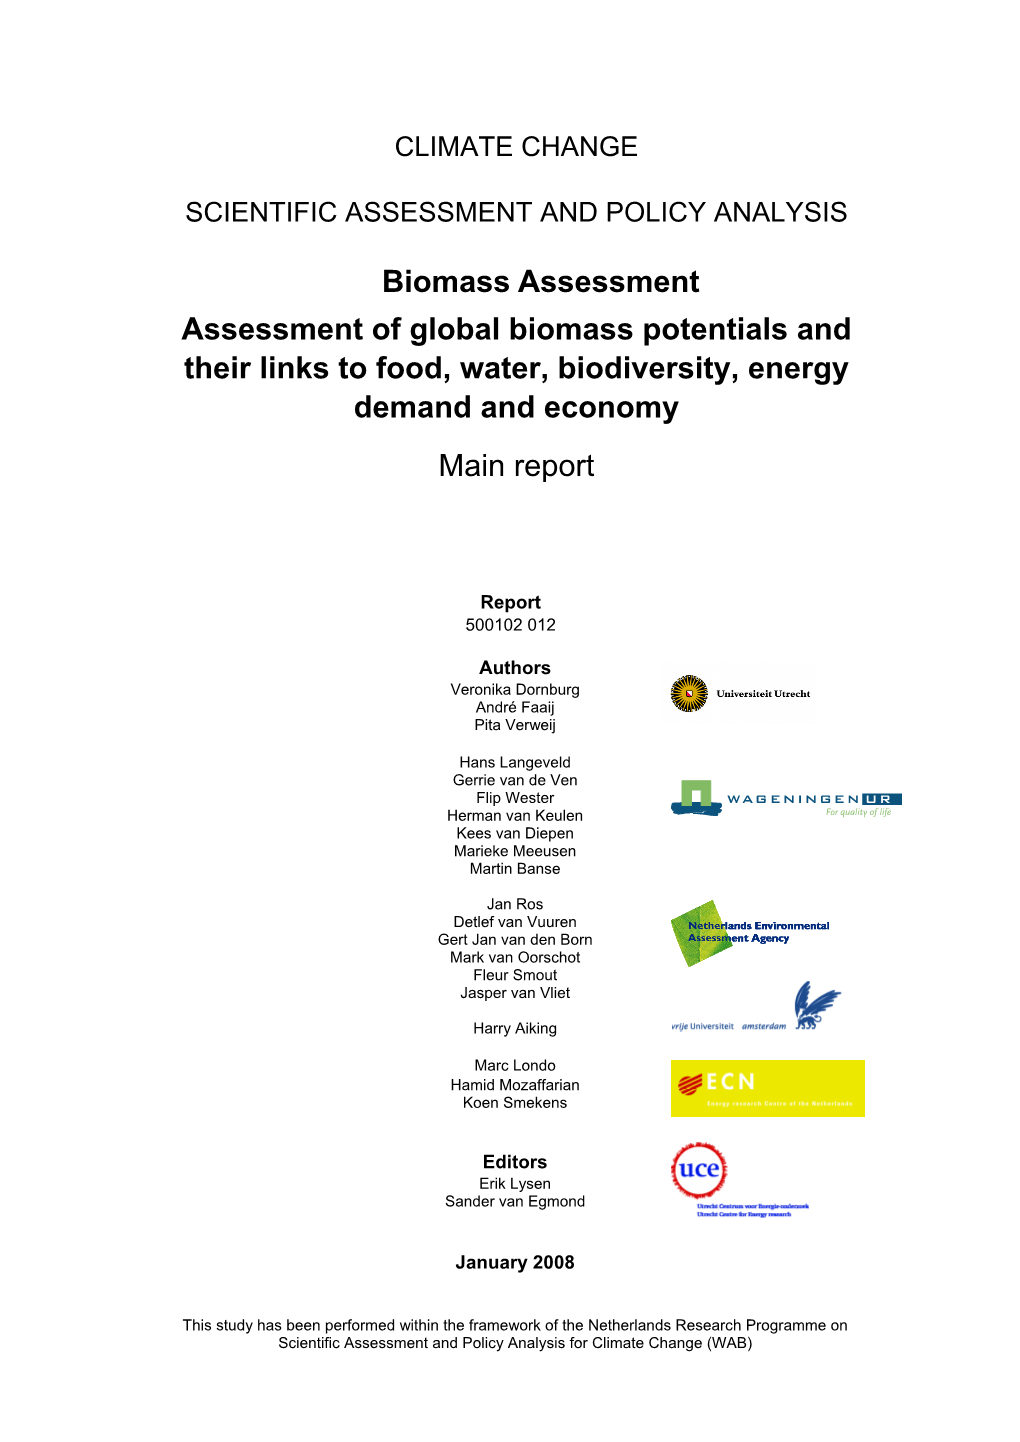 WAB Rapport 500102012 Biomass Assessment Assessment of Global